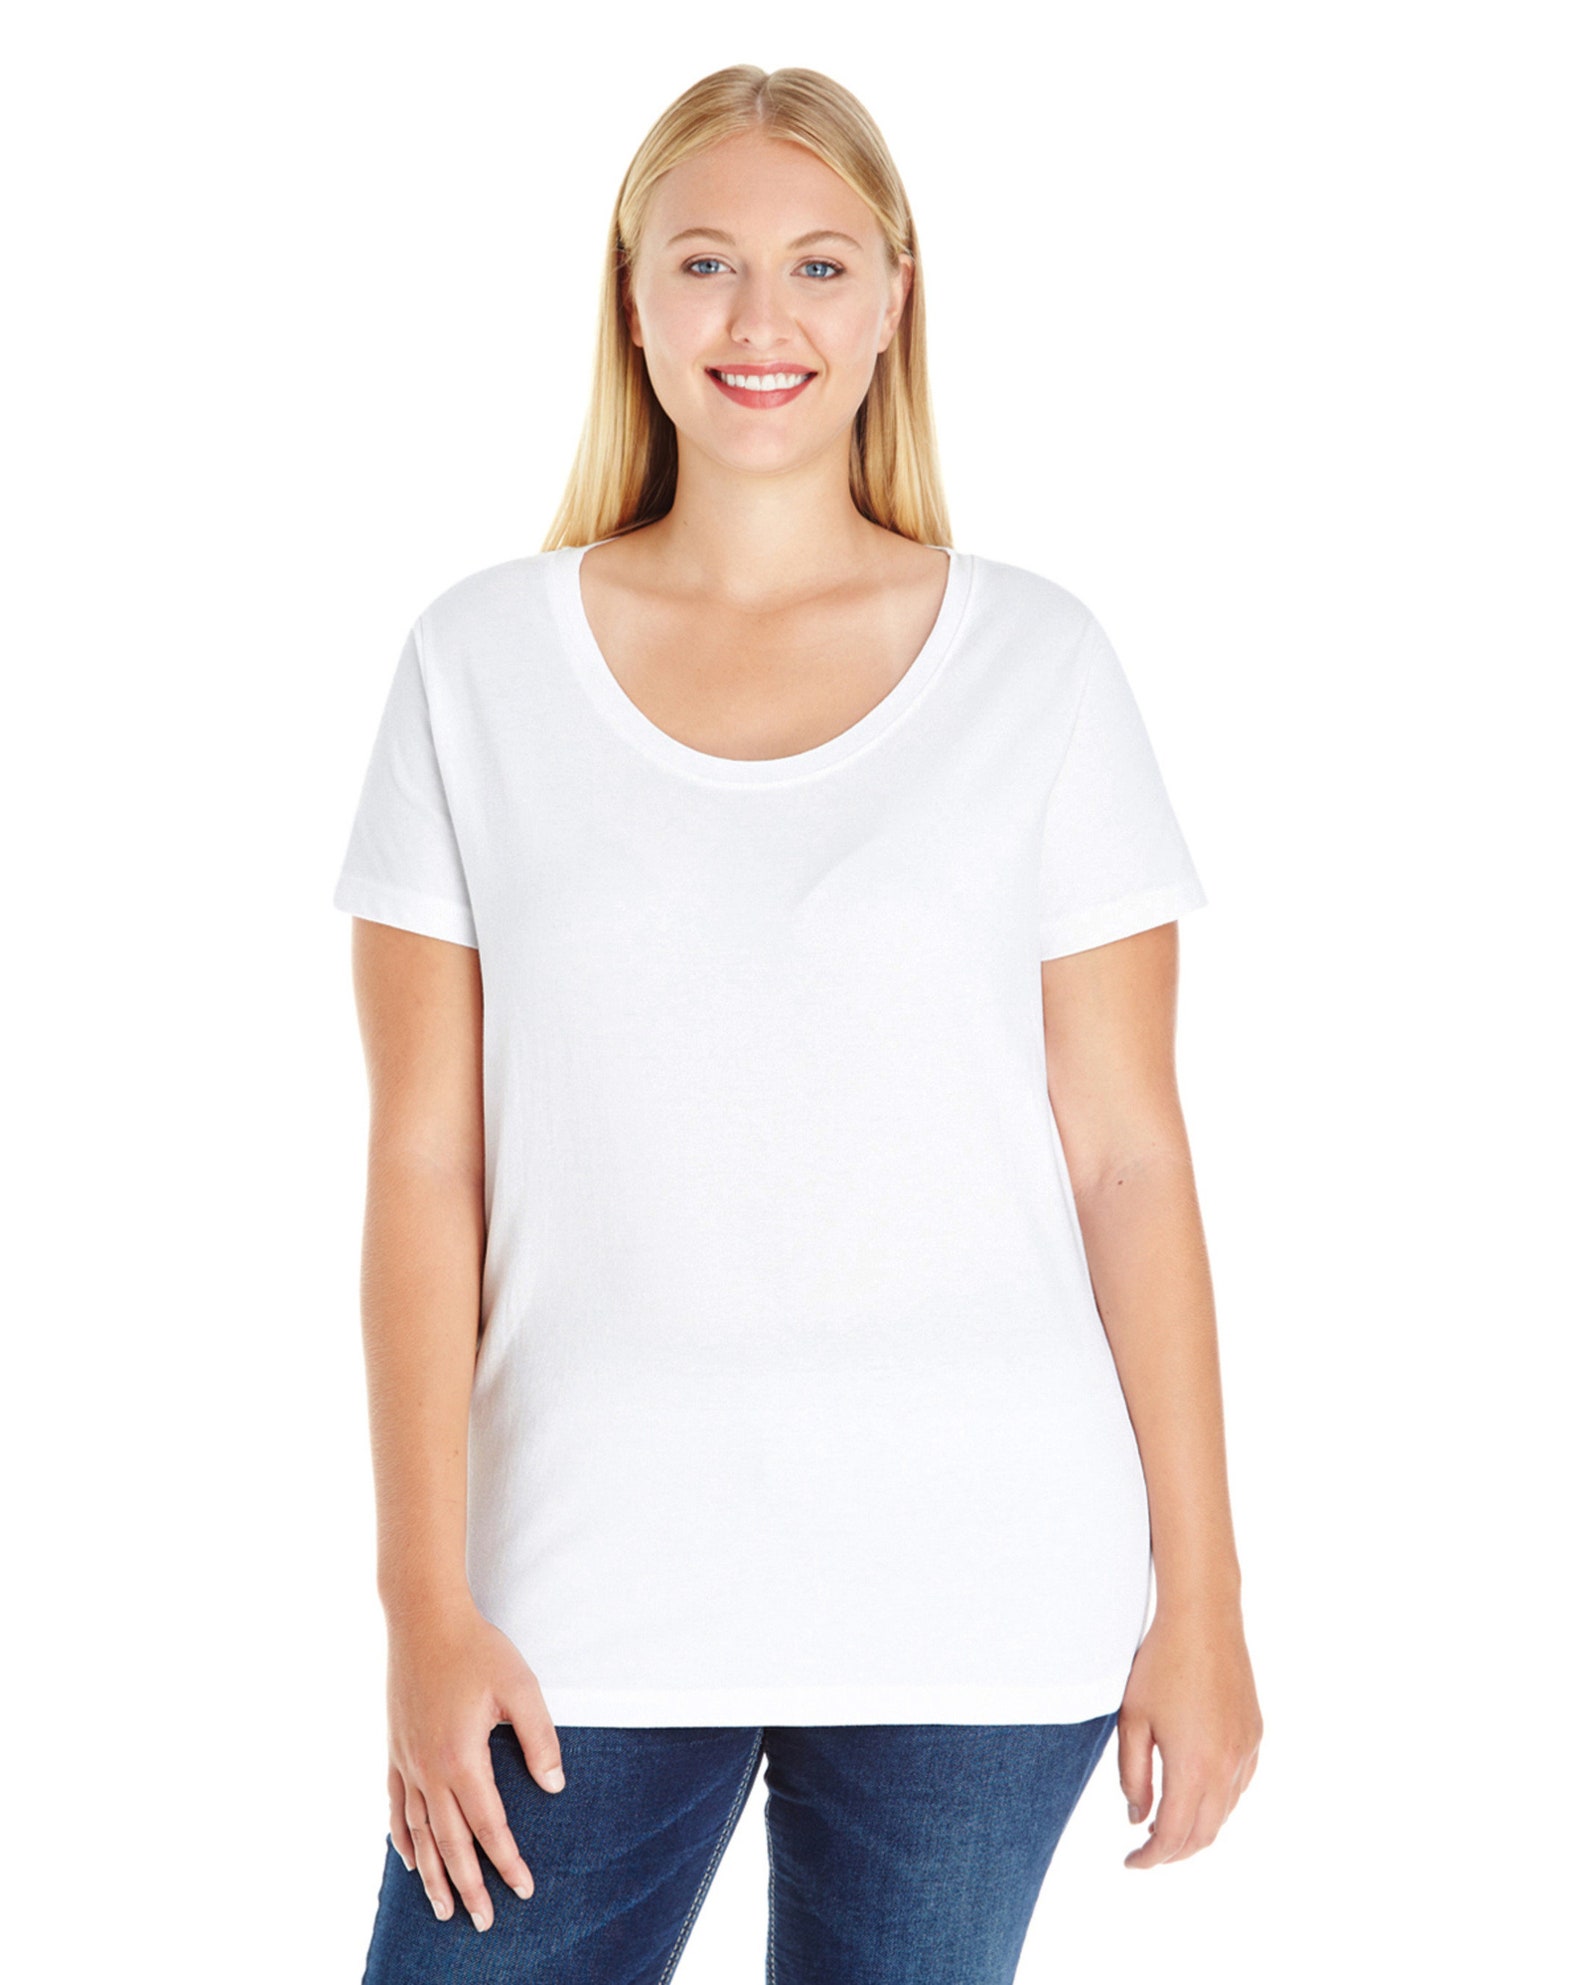 Plus Size Rhinestone Shirt Womens Premium LAT Brand Halloween | Etsy